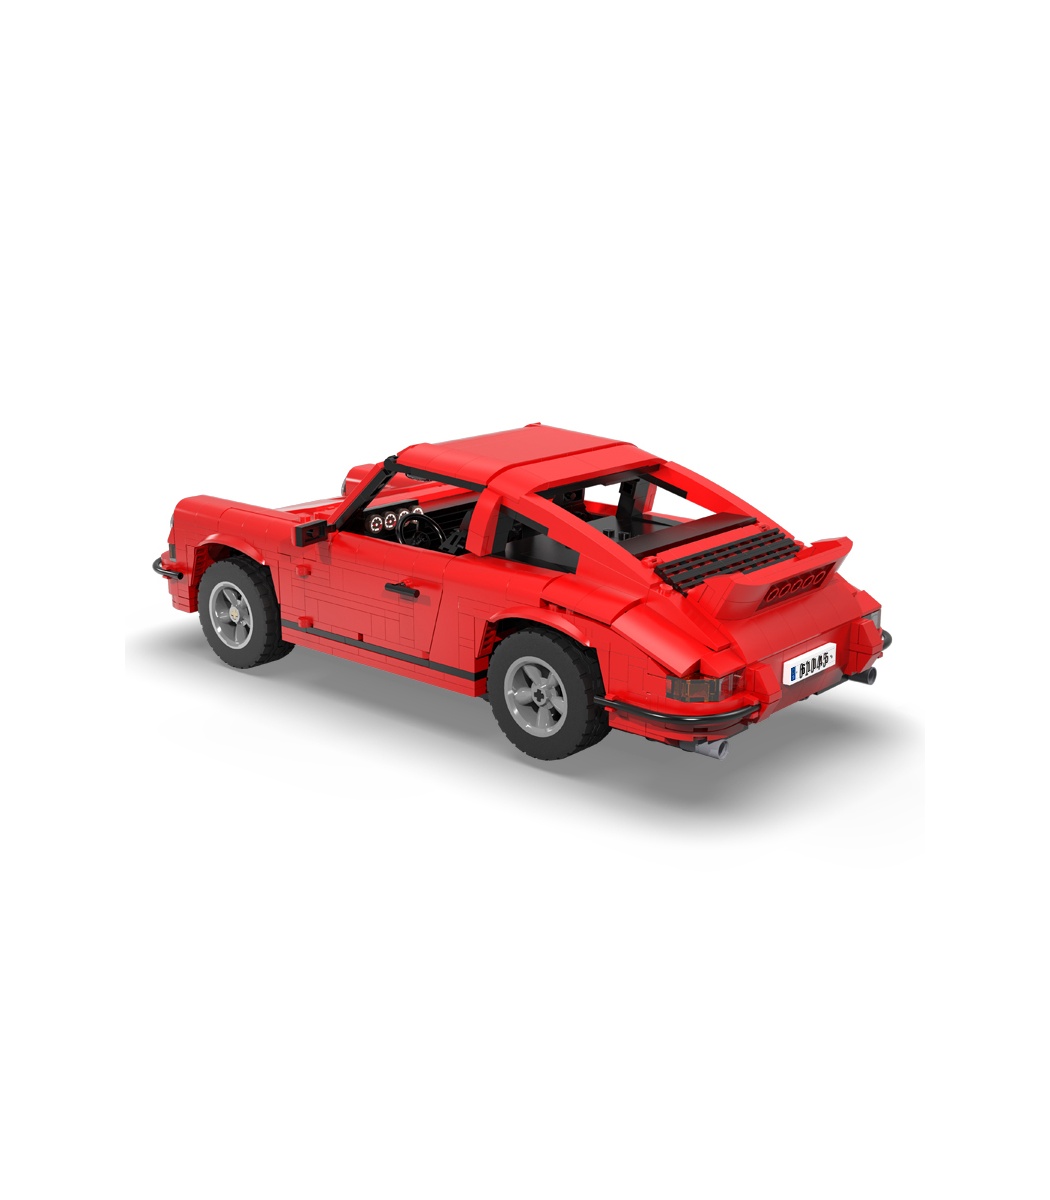 https://www.buildingtoystore.com/8894-superlarge_default/cada-c61045-retro-classic-sports-car-building-blocks-toy-set.jpg